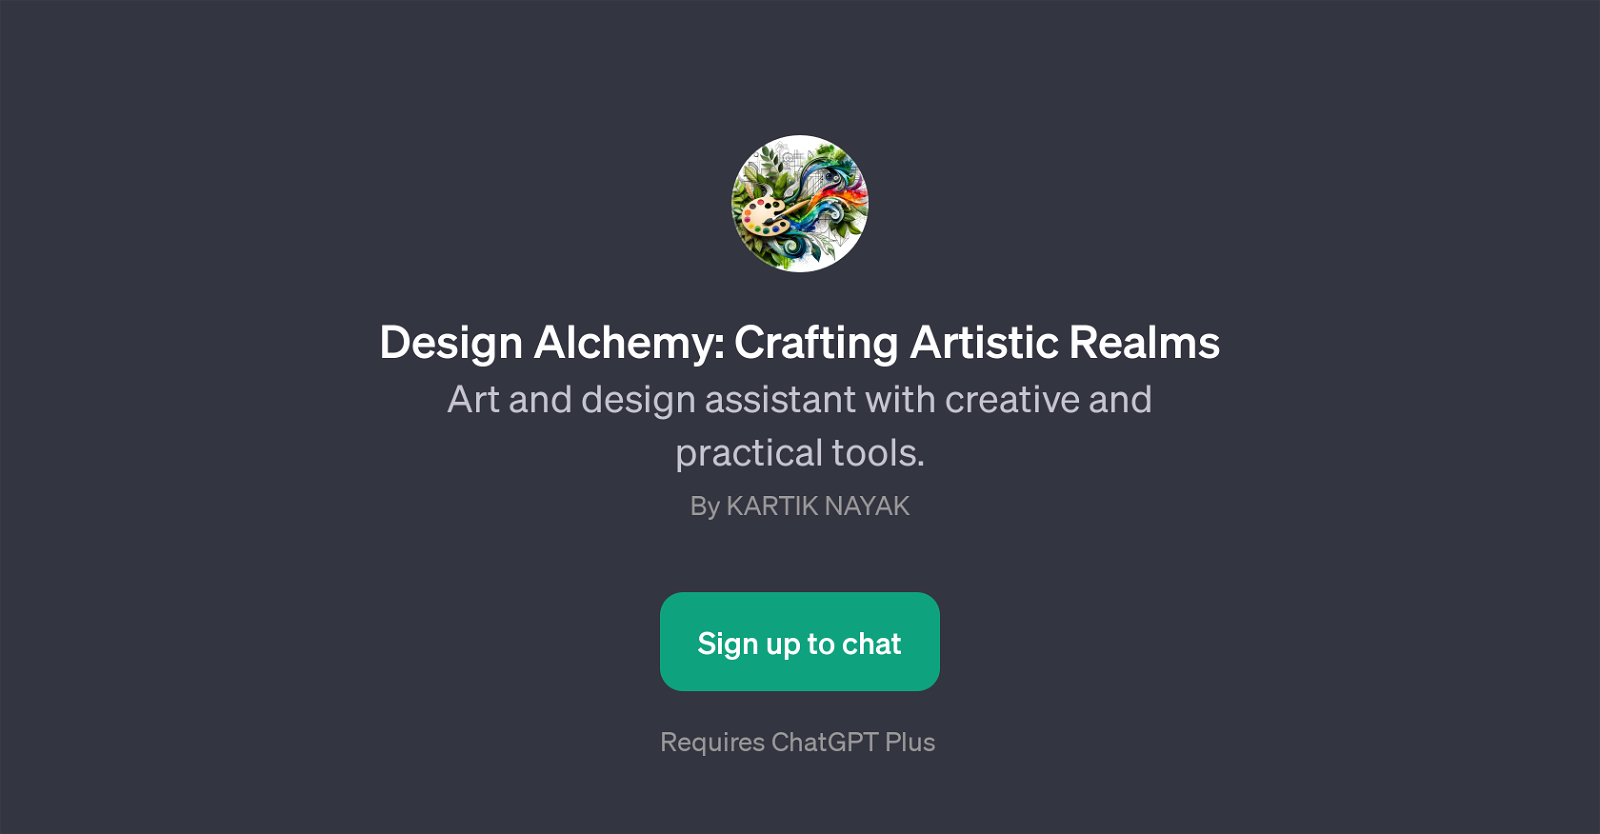 Design Alchemy: Crafting Artistic Realms website